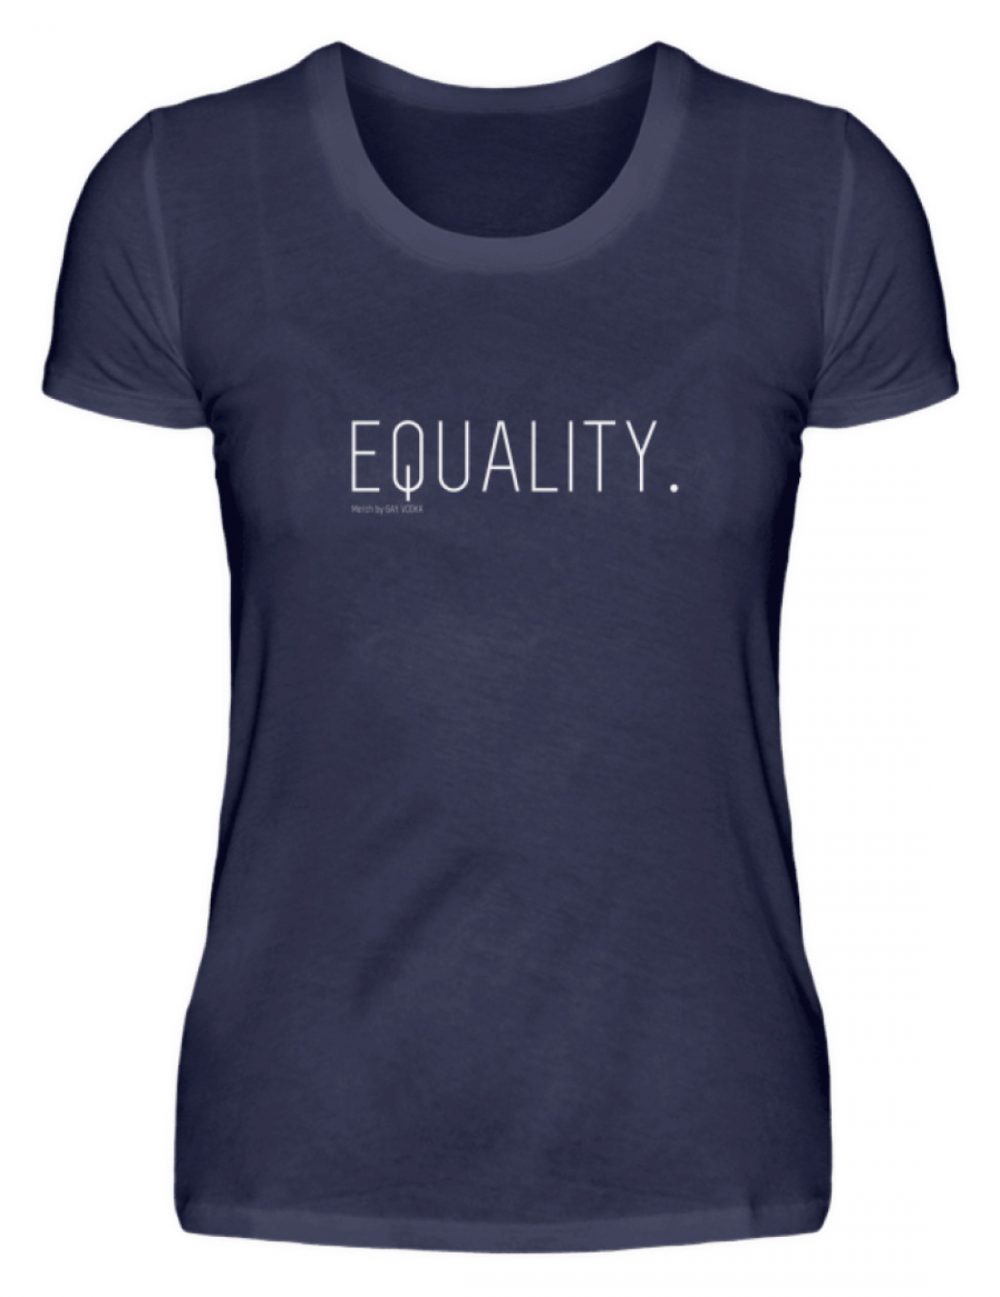 EQUALITY. - Damen Premiumshirt-198